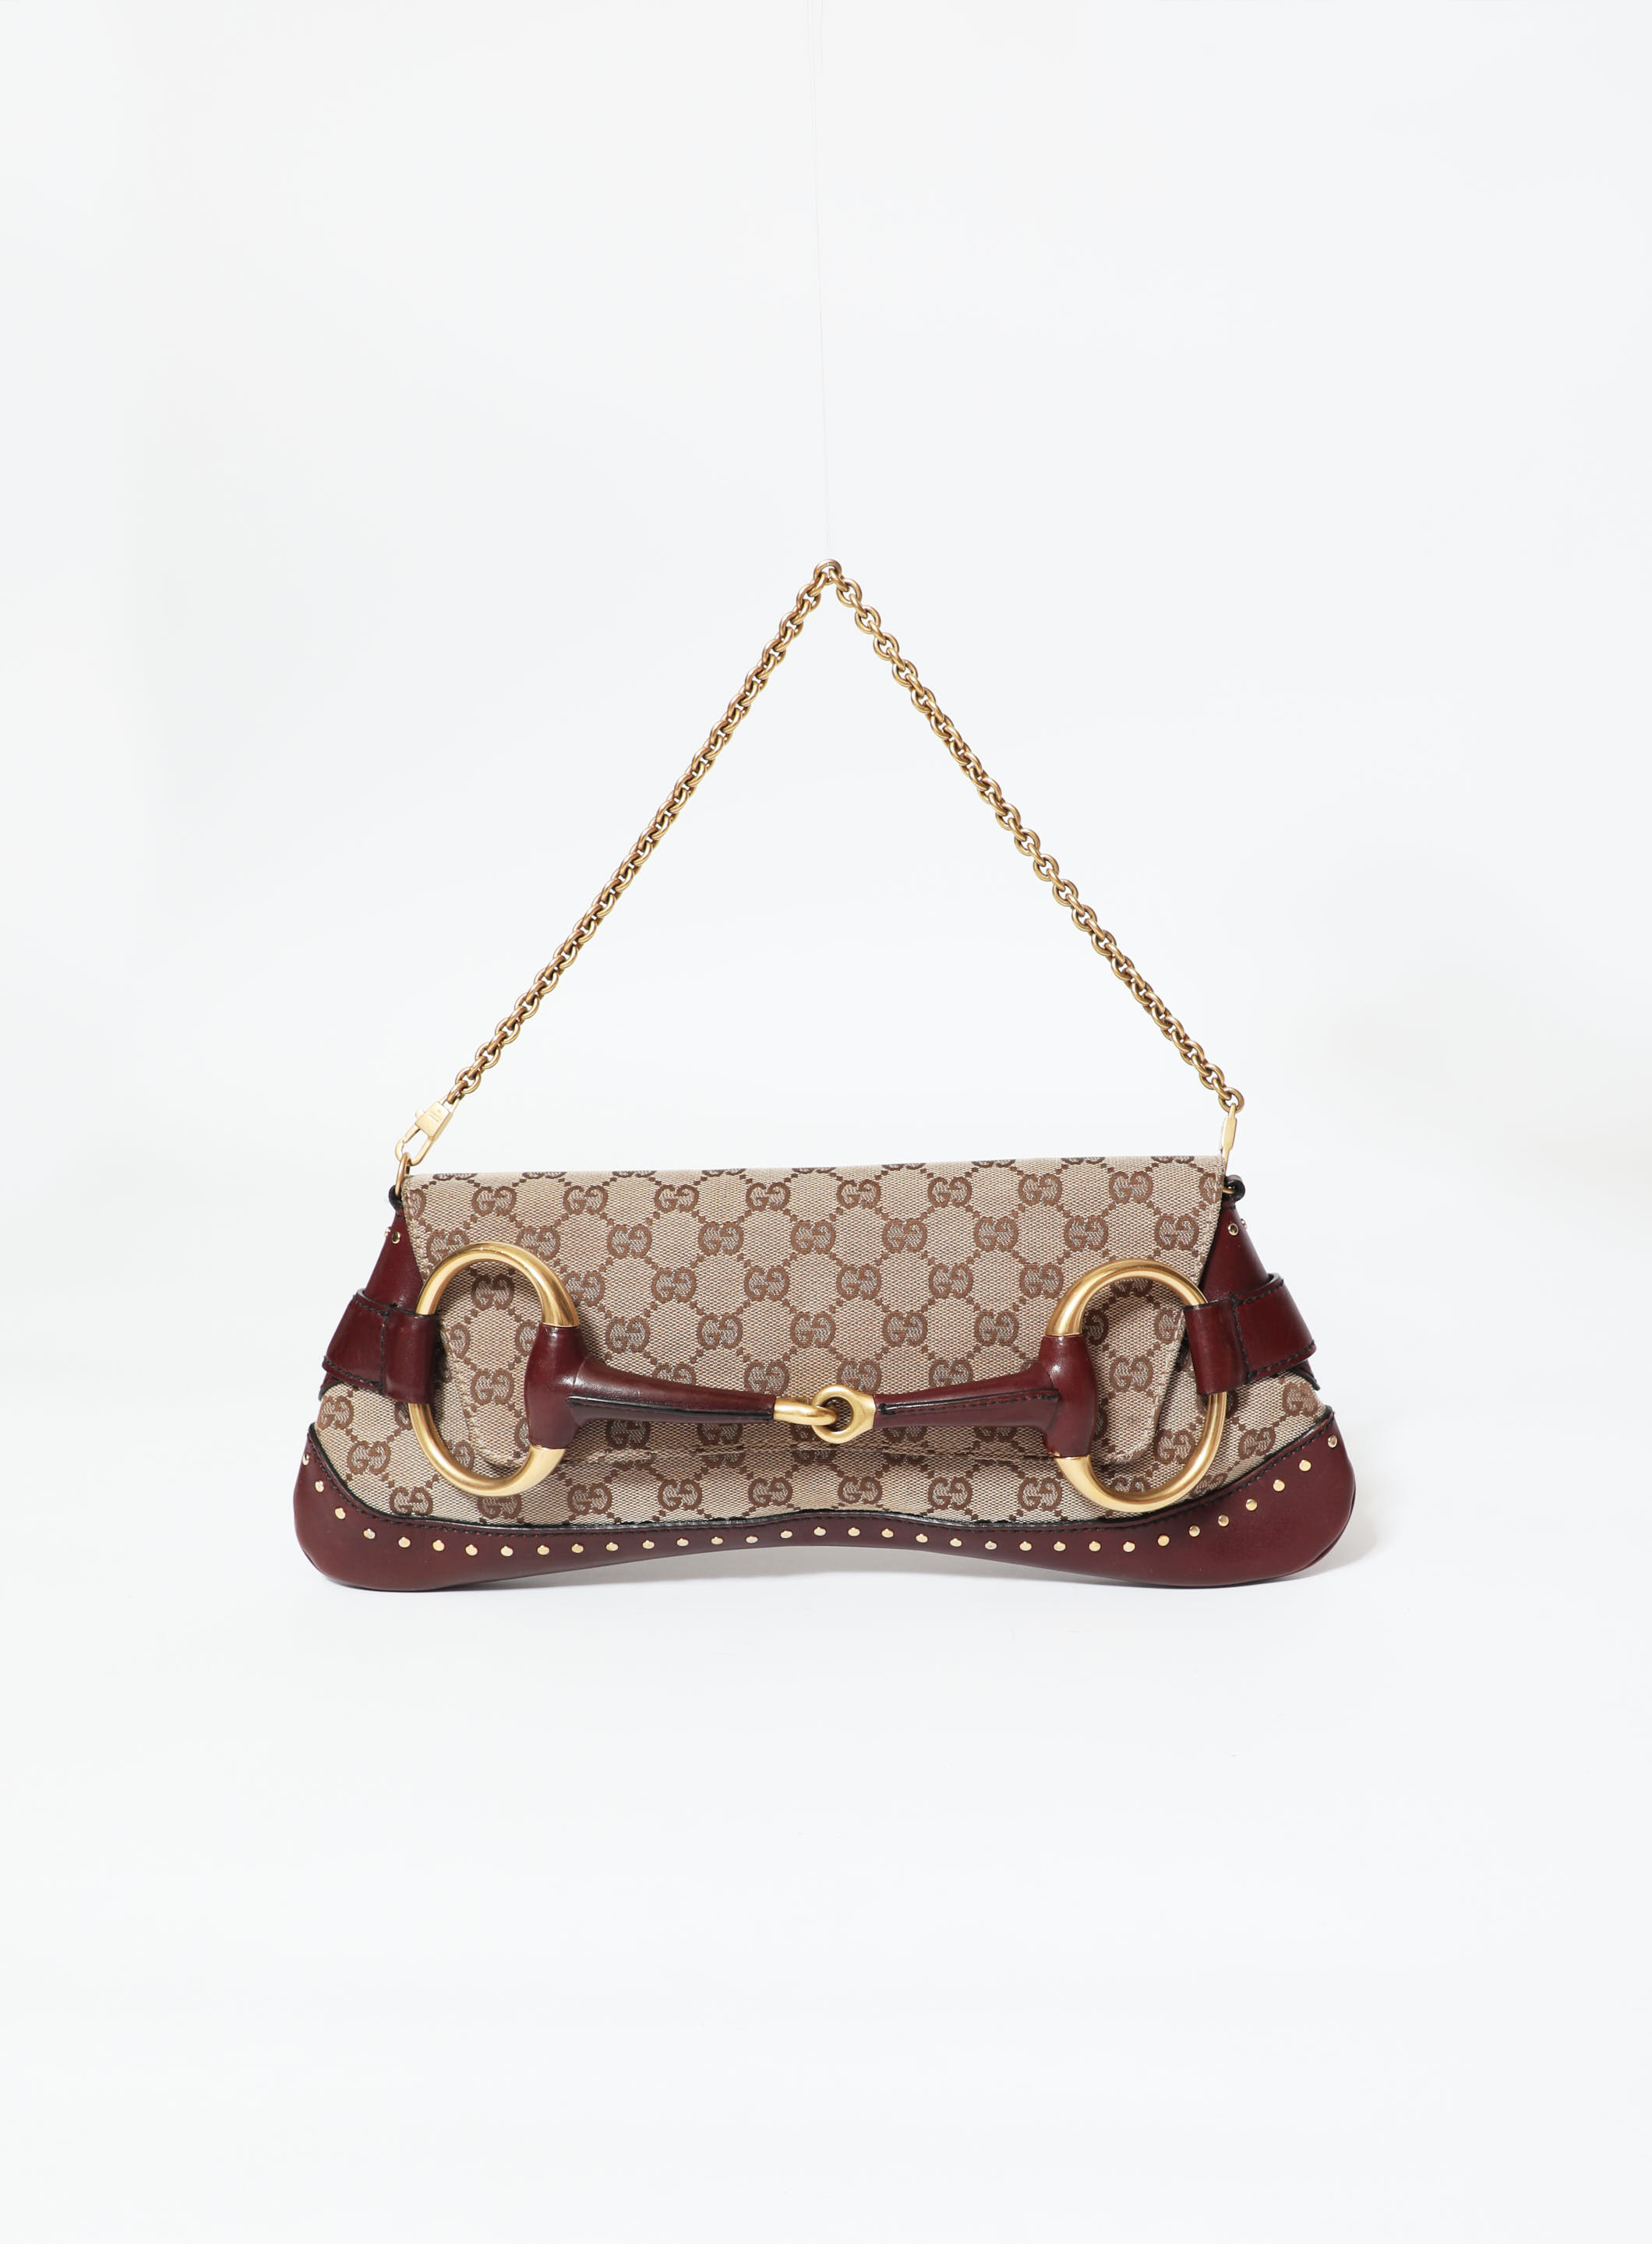 Gucci x Tom Ford Vintage Horsebit Bag